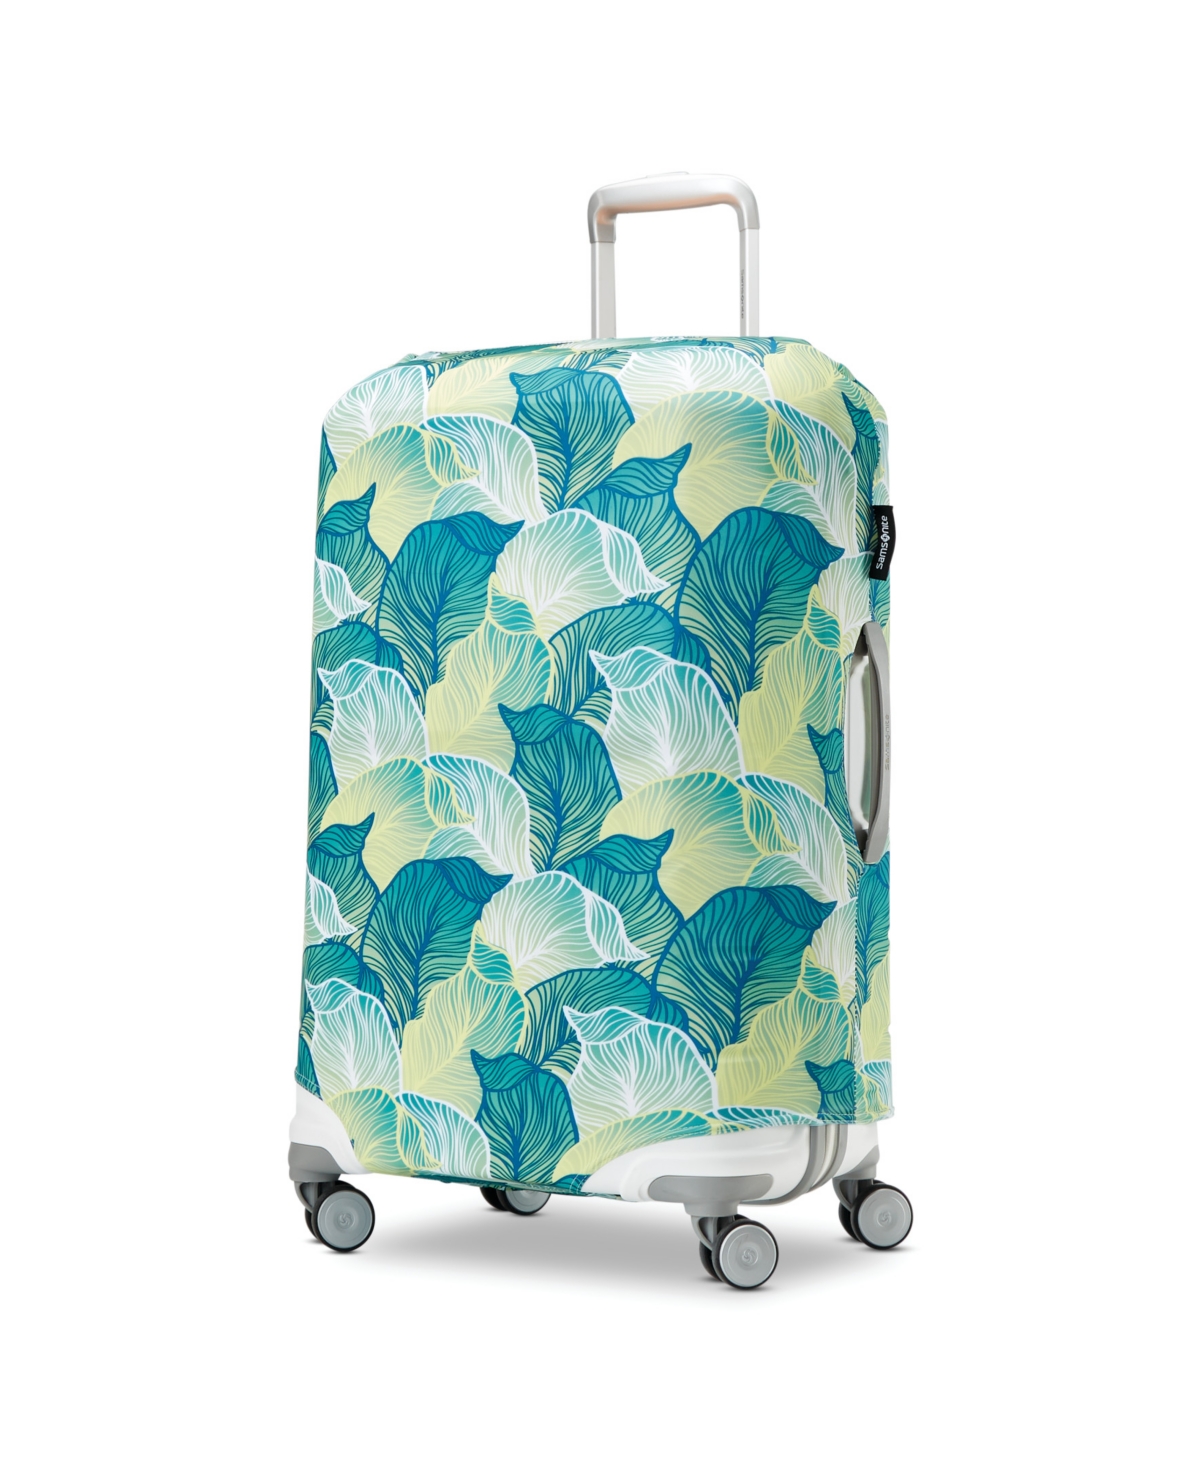 Samsonite Print Luggage Cover - Xl In Leaf Print